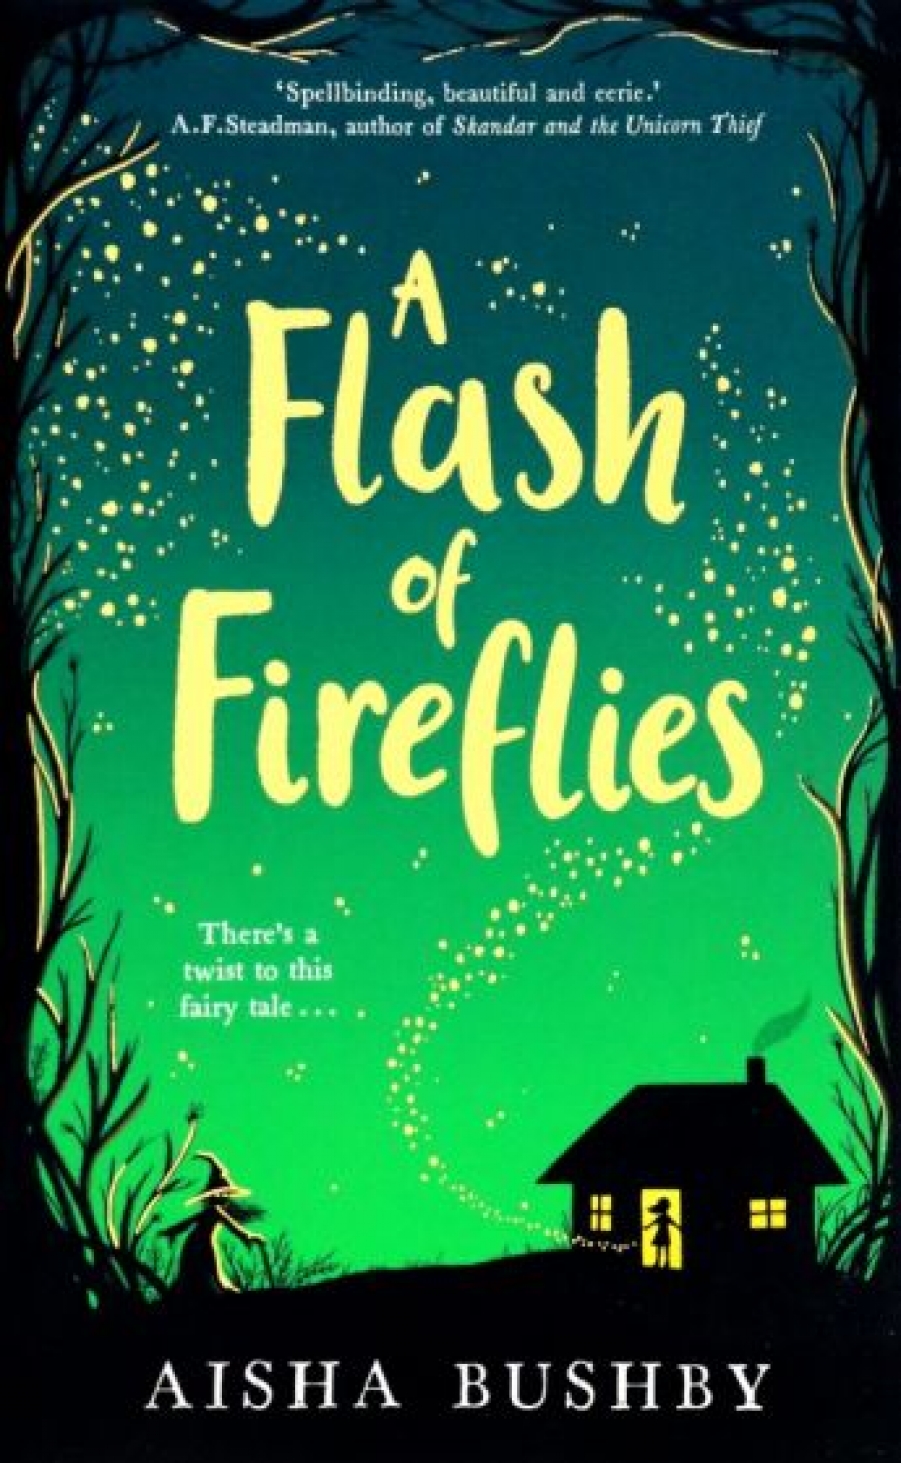 Bushby Aisha A Flash of Fireflies 